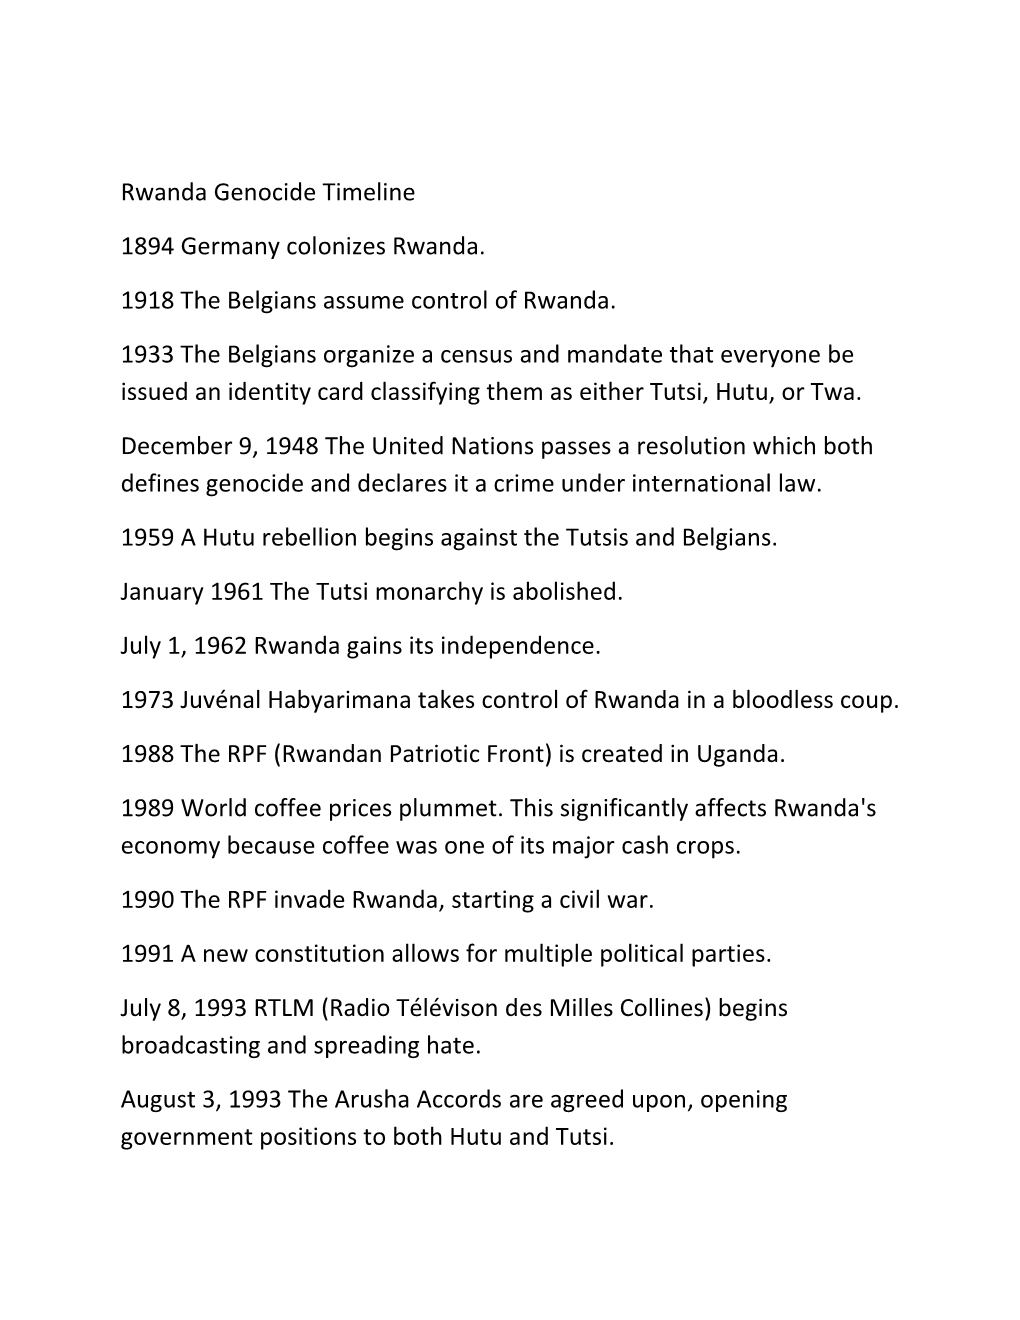 Rwanda Genocide Timeline 1894 Germany Colonizes Rwanda. 1918 the Belgians Assume Control of Rwanda. 1933 the Belgians Organize A